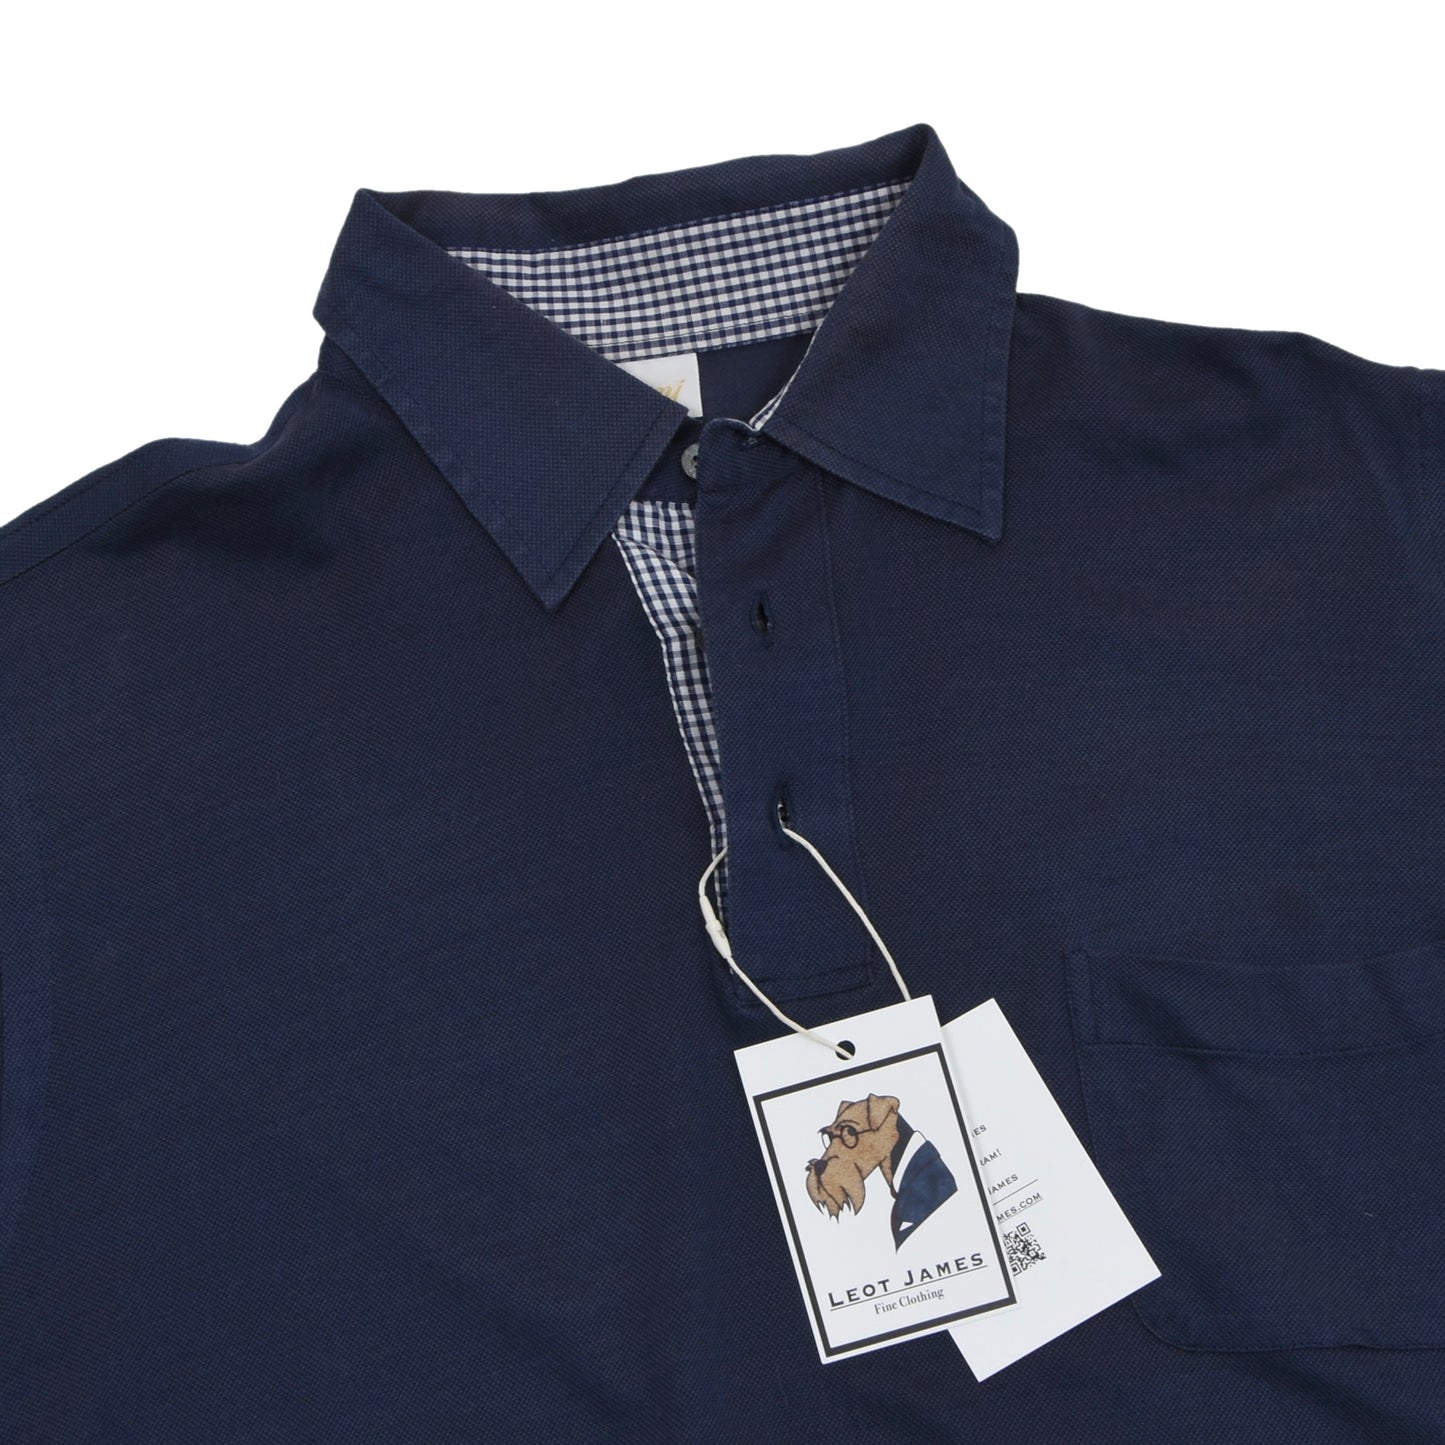 Brioni Cotton Polo Shirt Size M - Navy Blue